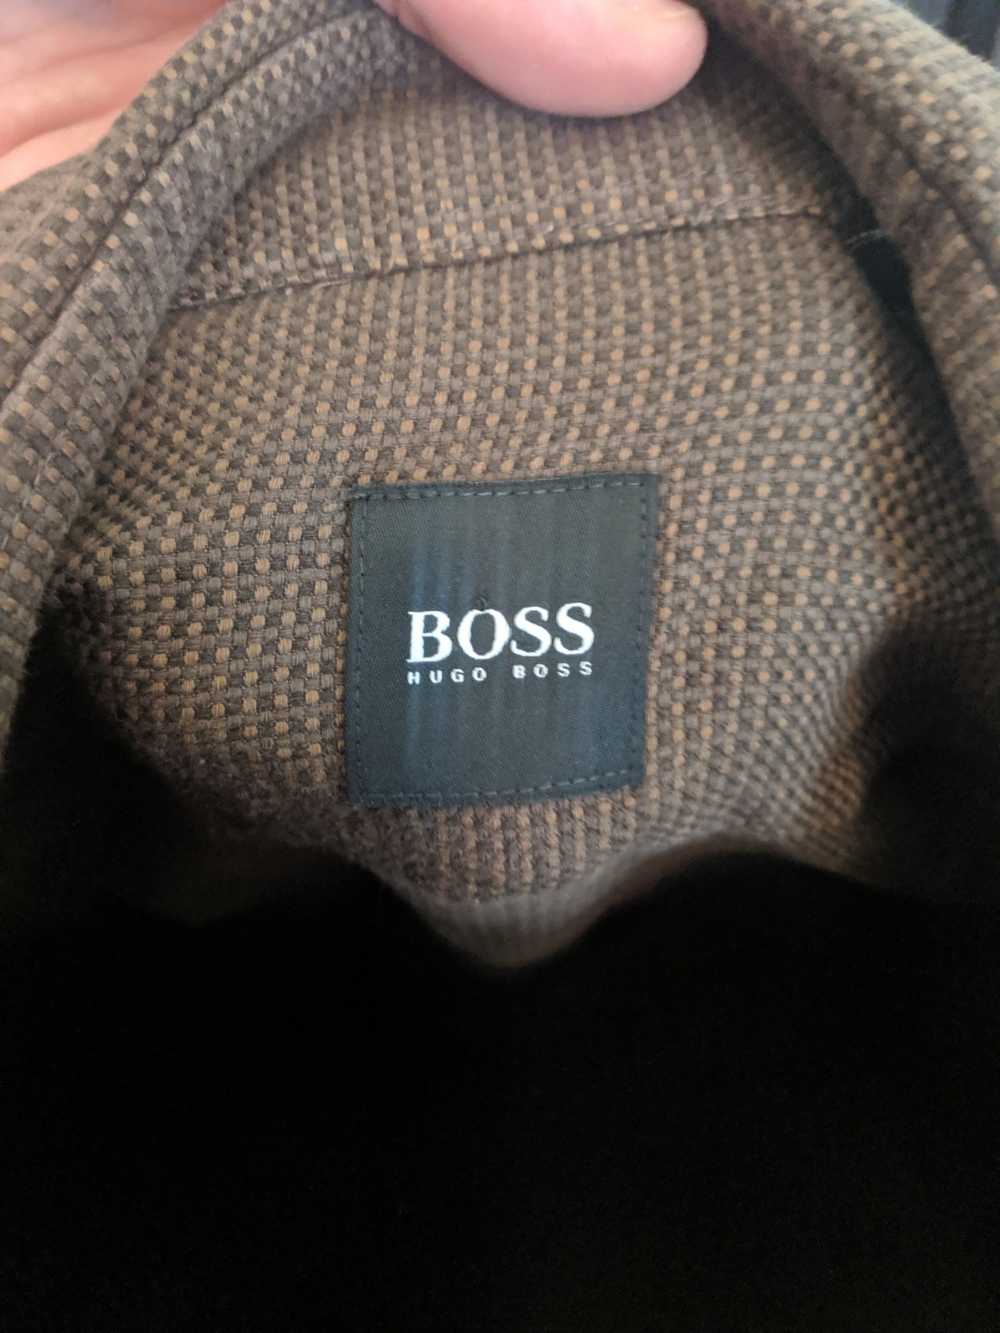 Hugo Boss Brown woven knit logo shirt - image 5